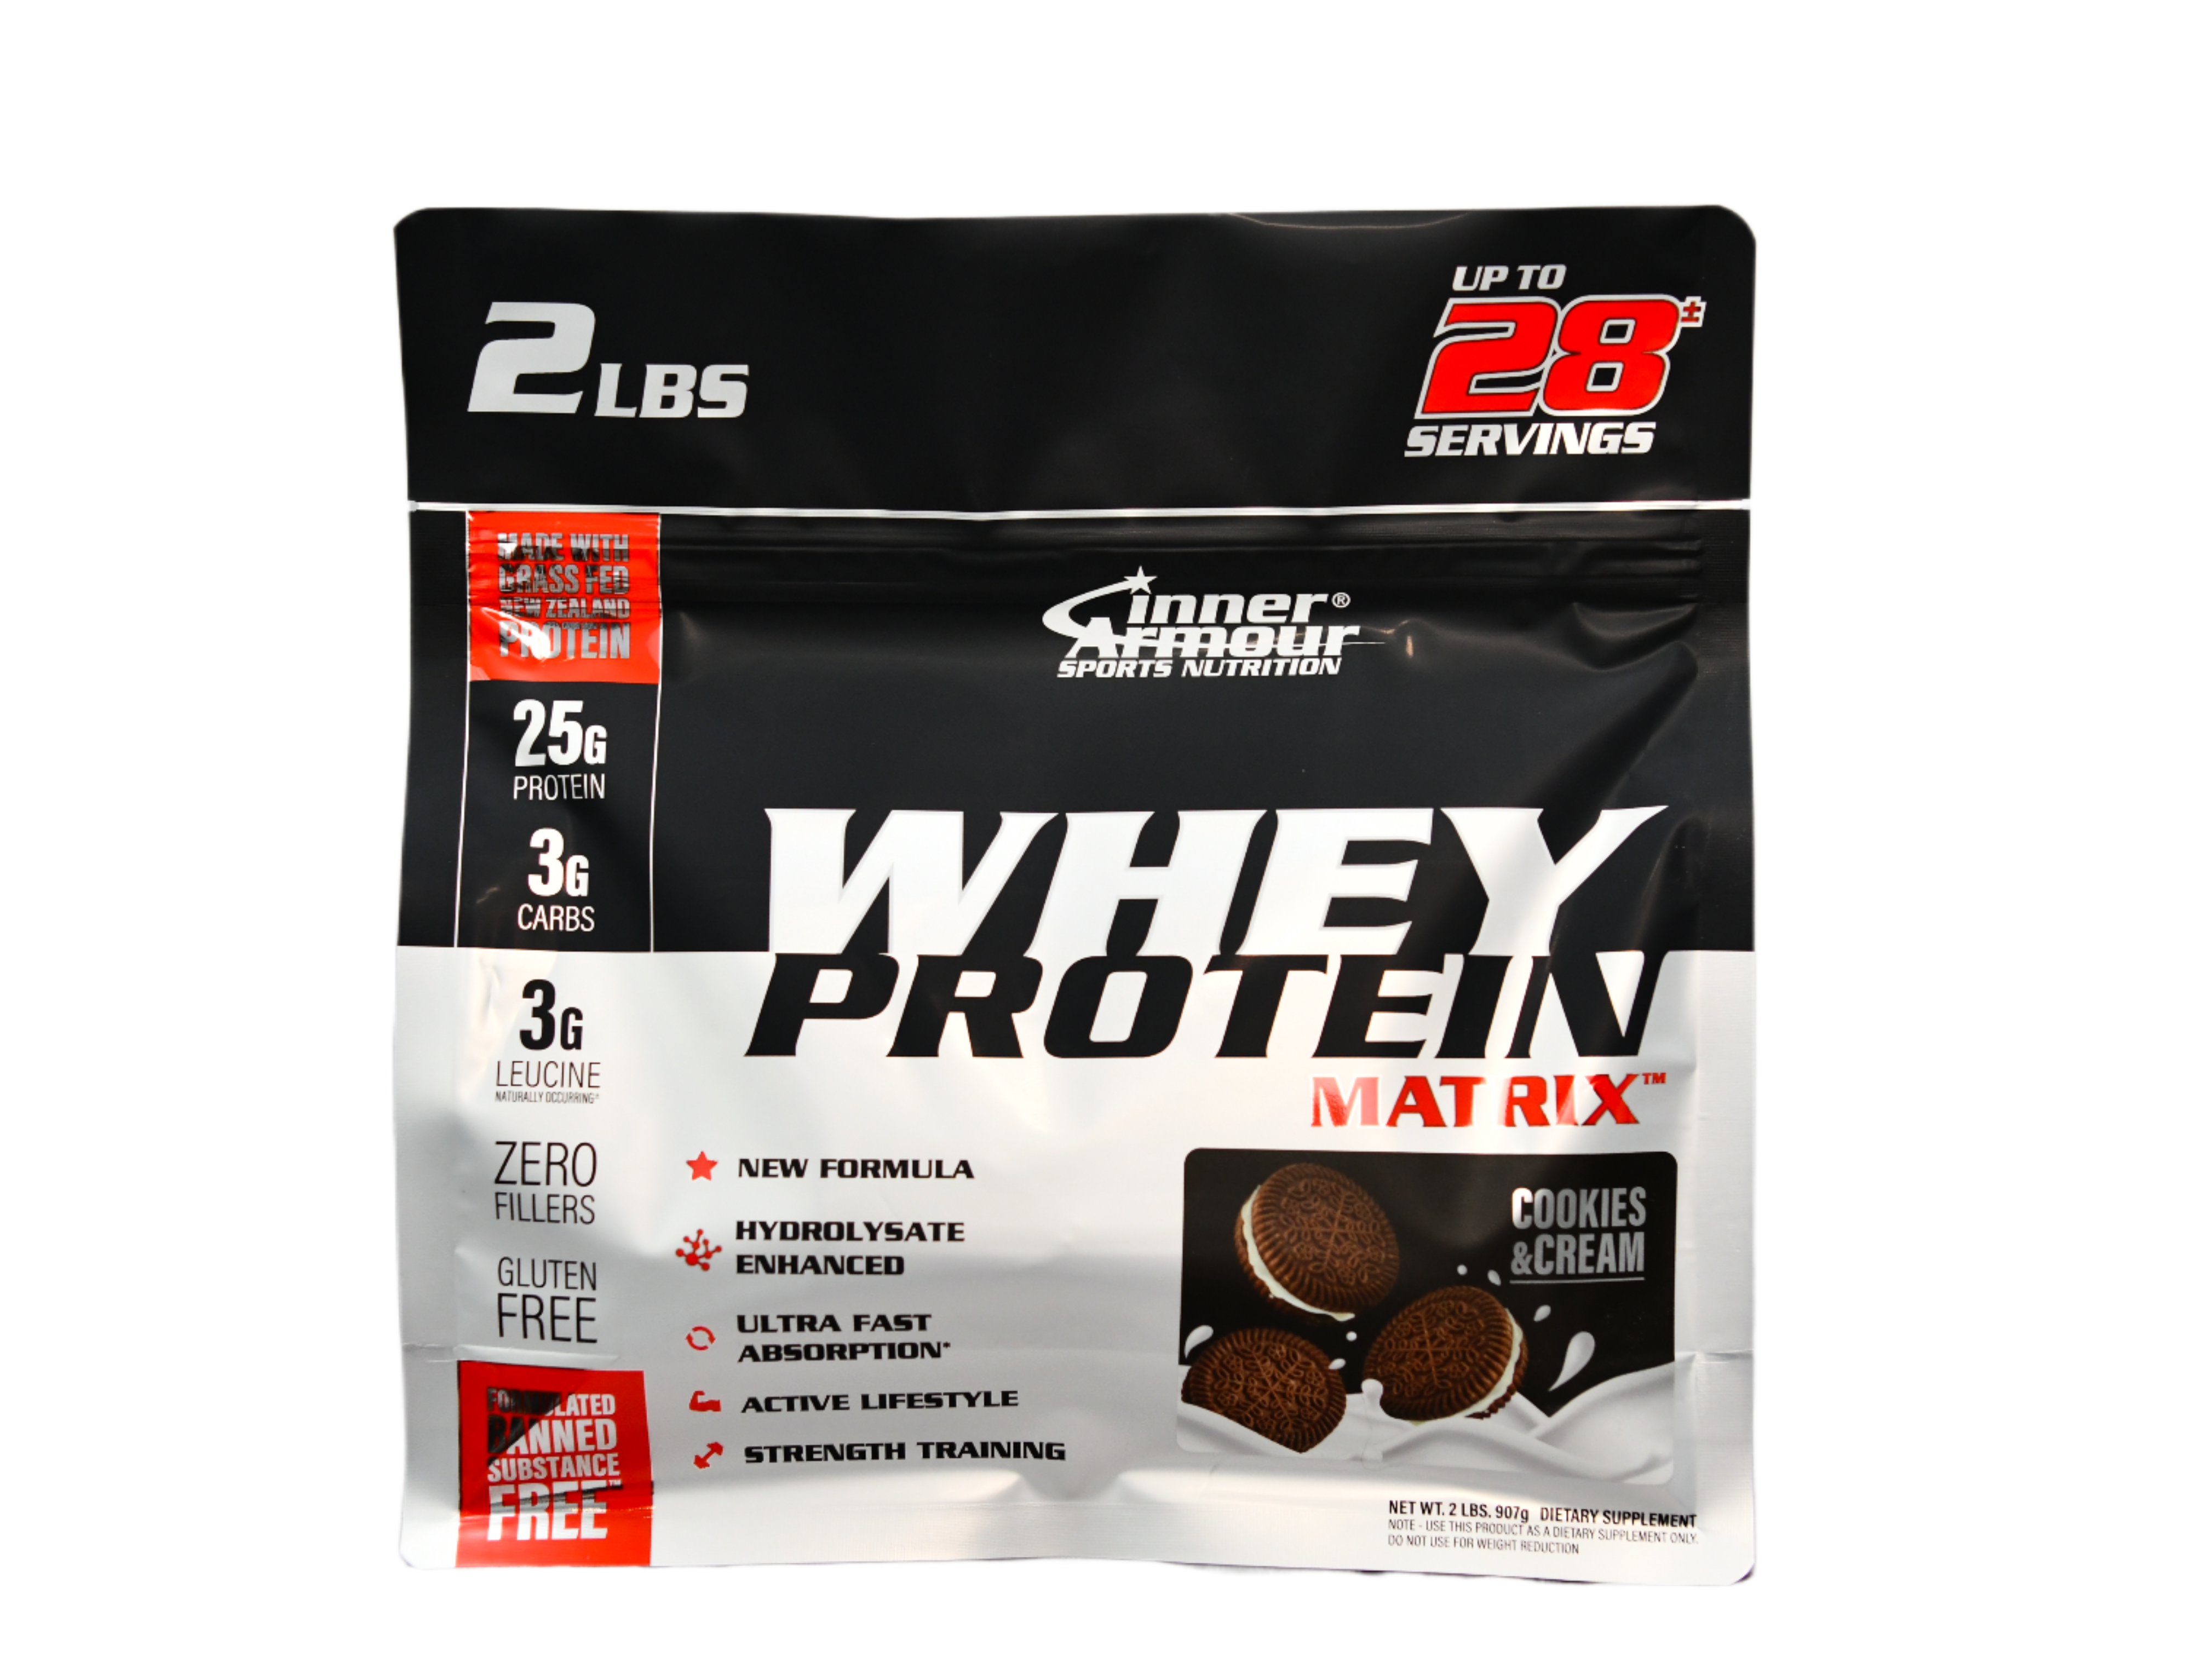 Inner armour Whey Protein Matrix in bag - chocolate|Vanilla|Cookie&Cream (2 lbs)